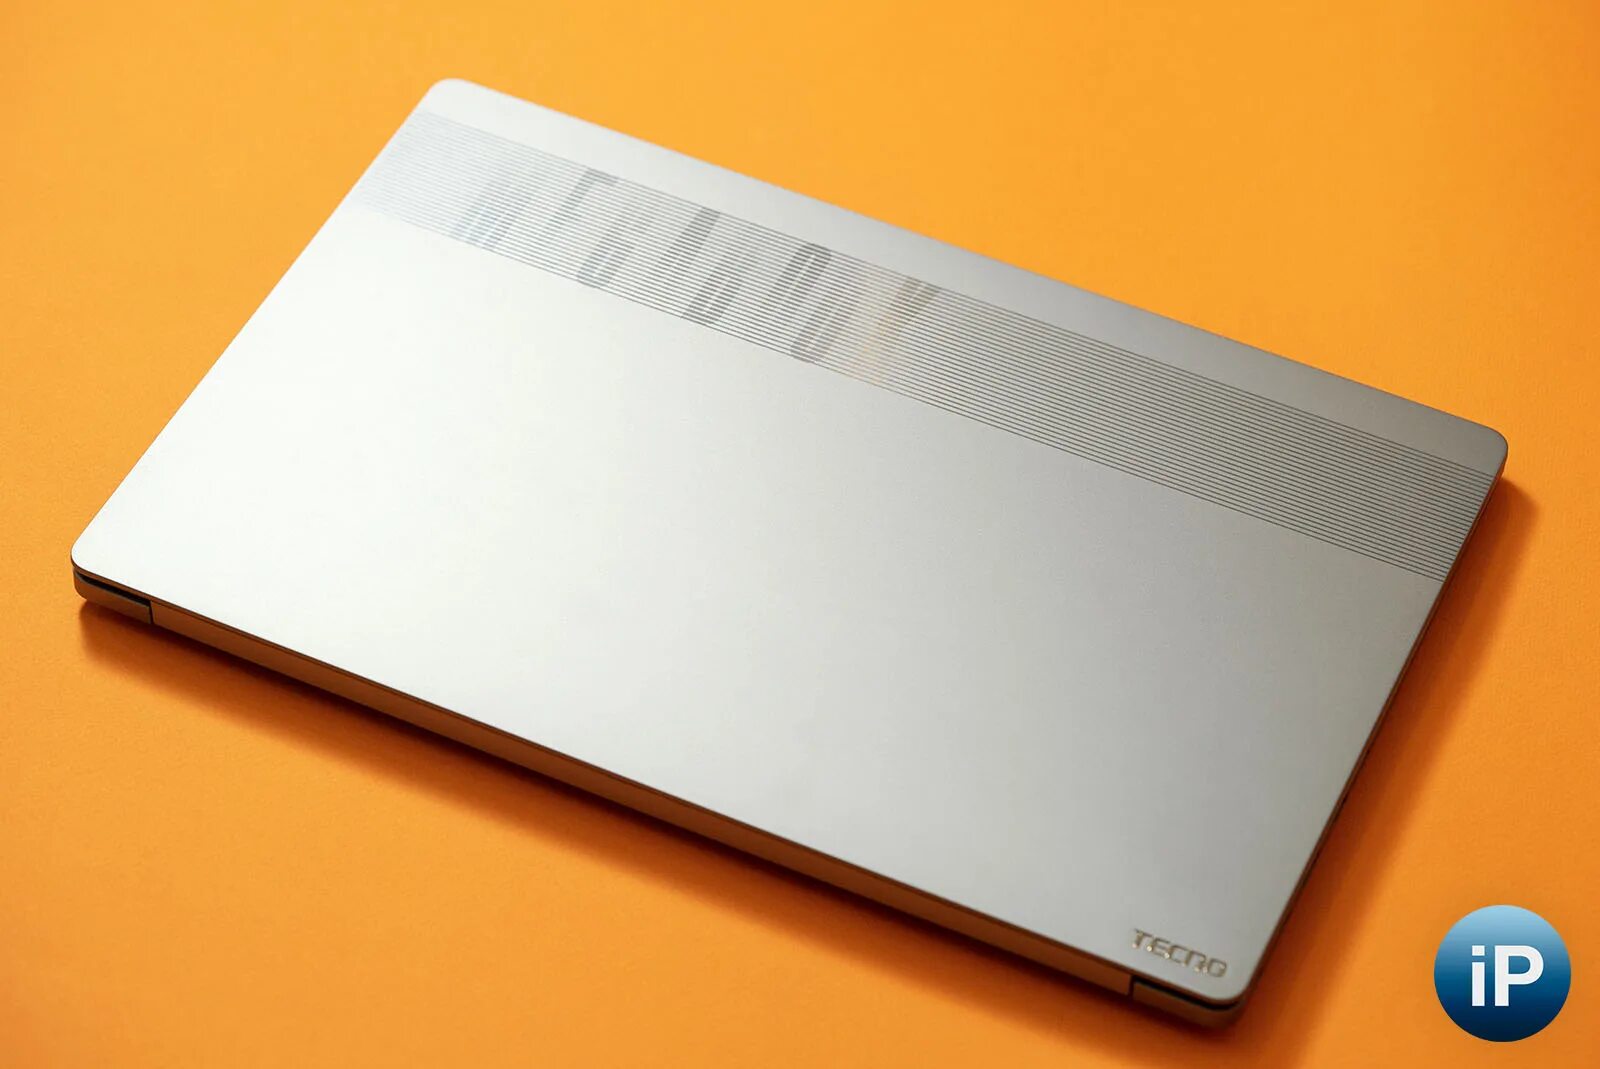 Ноутбук MEGABOOK. Techno ноутбук MEGABOOK цвета. Матрица ноутбука Techno MEGABOOK t1. Ноутбук Tecno MEGABOOK t1 синий. Ноутбук megabook t1 купить